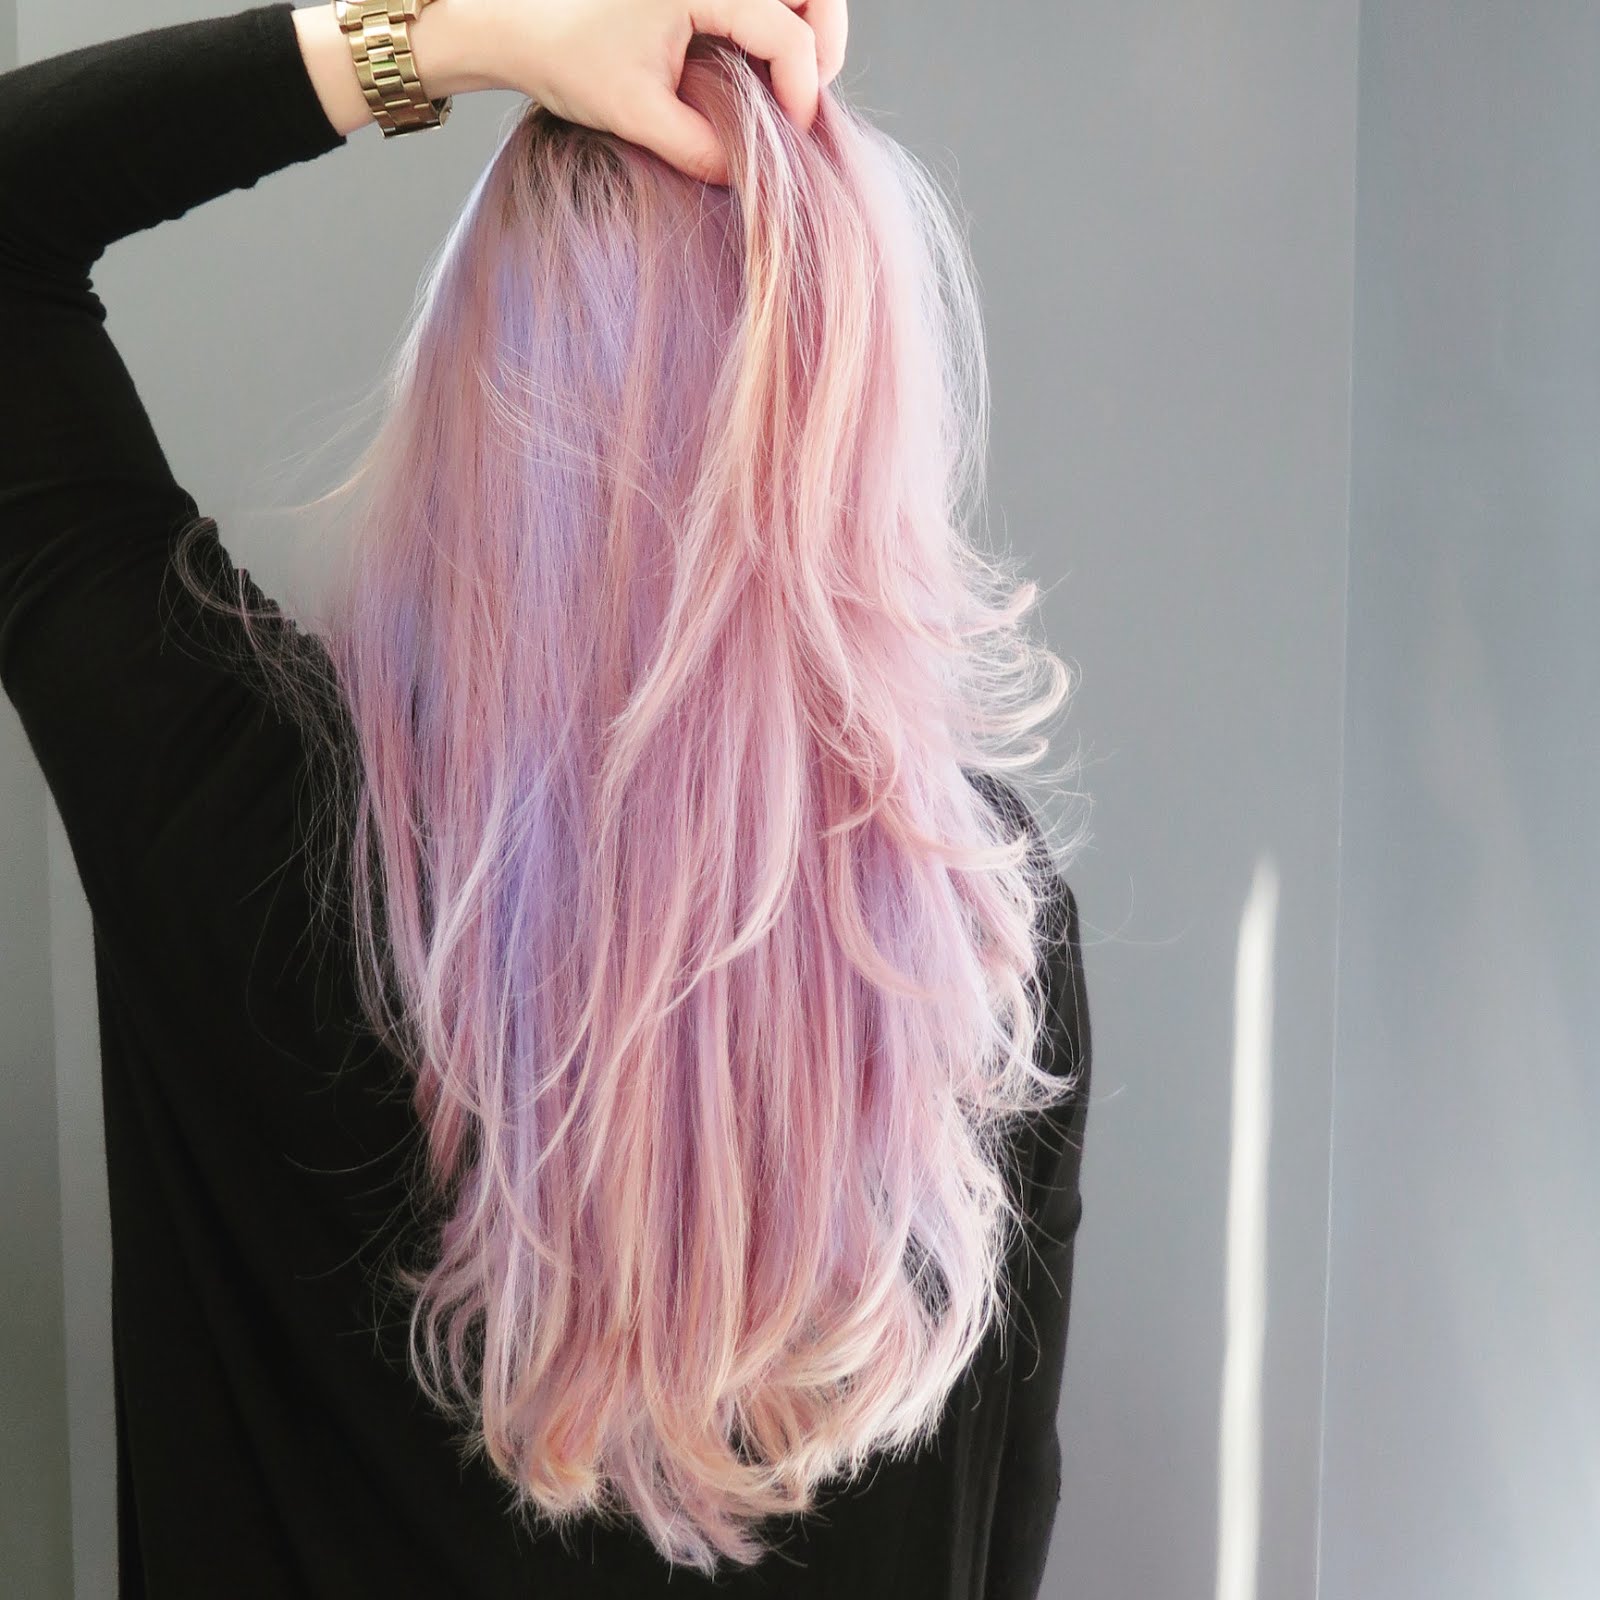 Warna rambut ungu campur abu abu